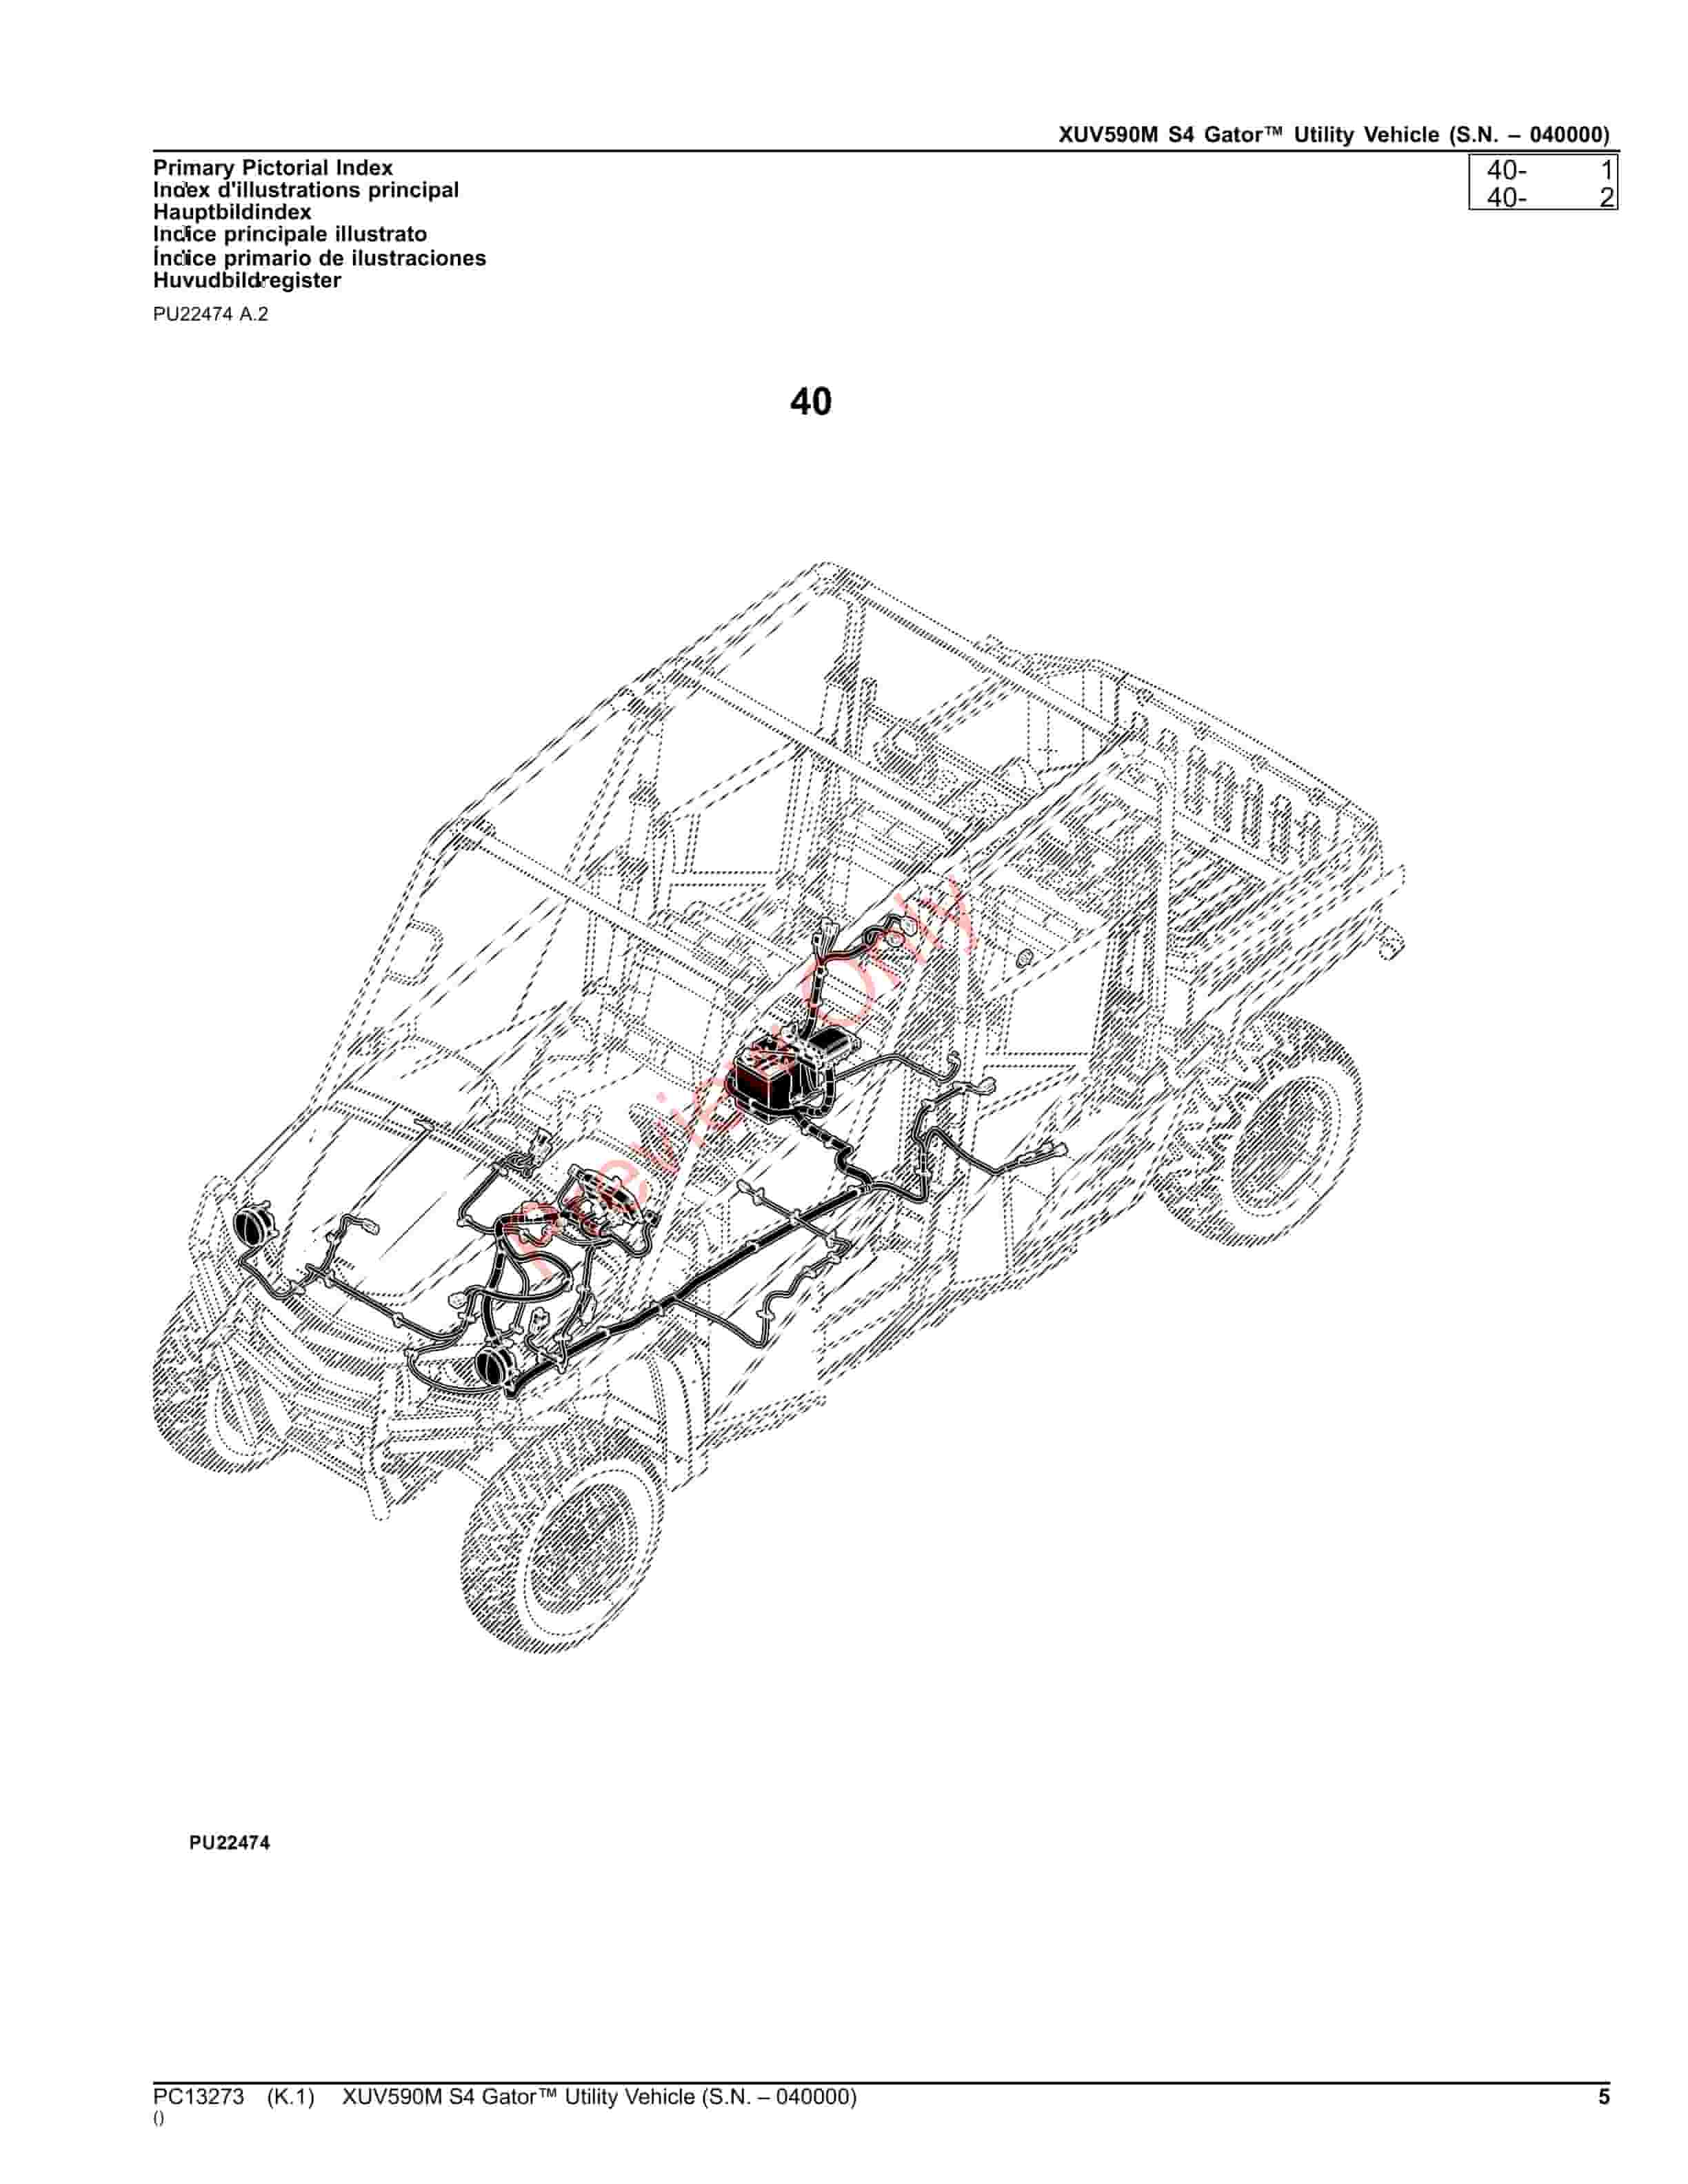 John Deere XUV590M S4 Gator Utility Vehicle (S.N. 040000) Parts Catalog PC13273 22OCT23-5